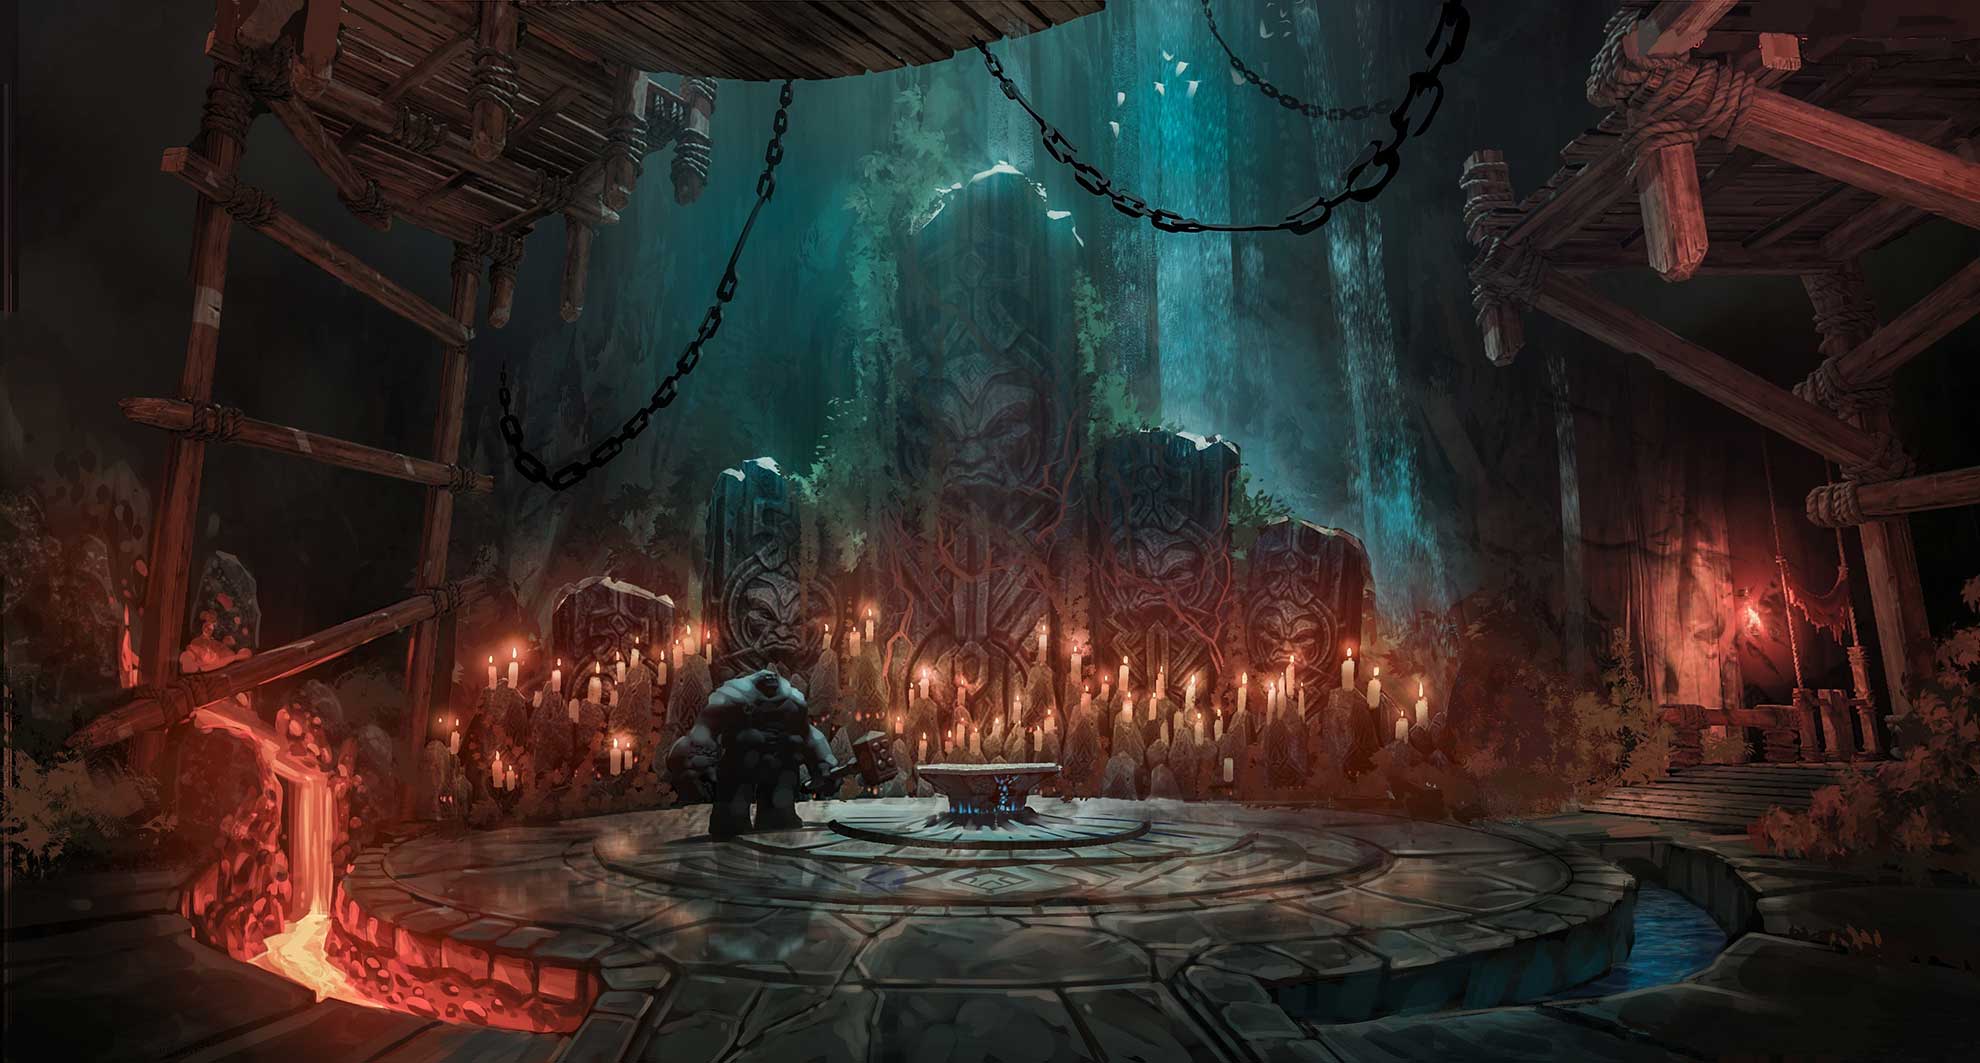 Nuovo trailer di gameplay per Darksiders III, ambientato in una caverna